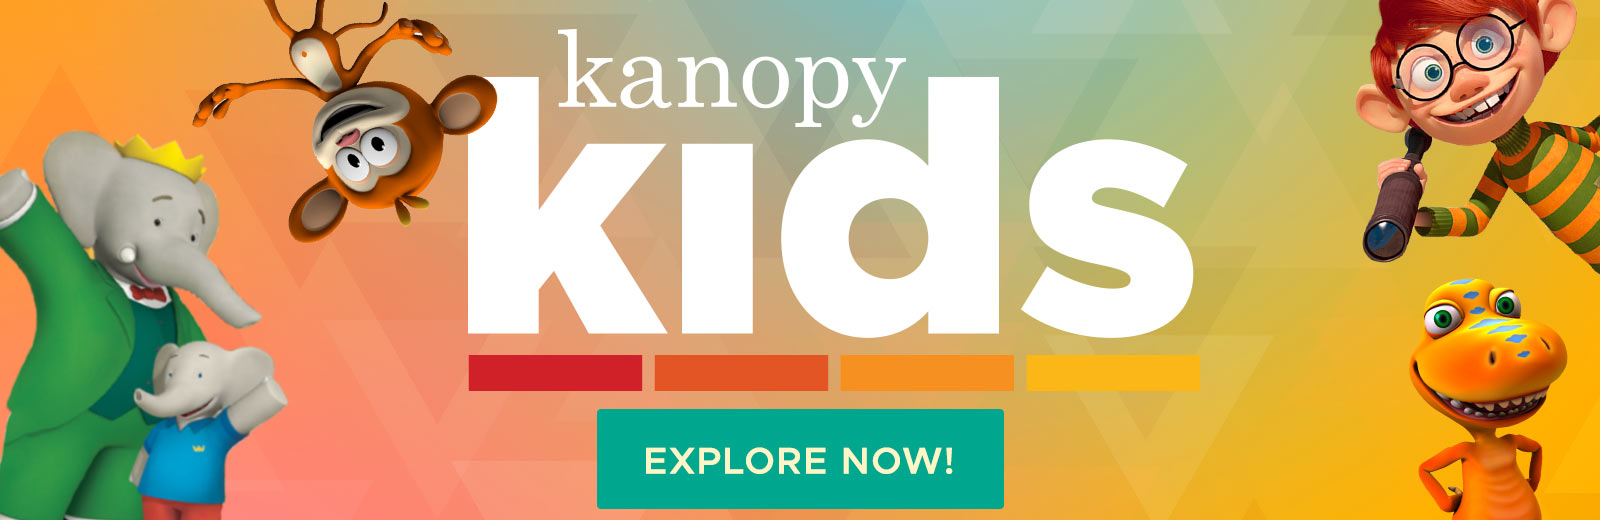 Kanopy Kids: Link to Main Kanopy login page